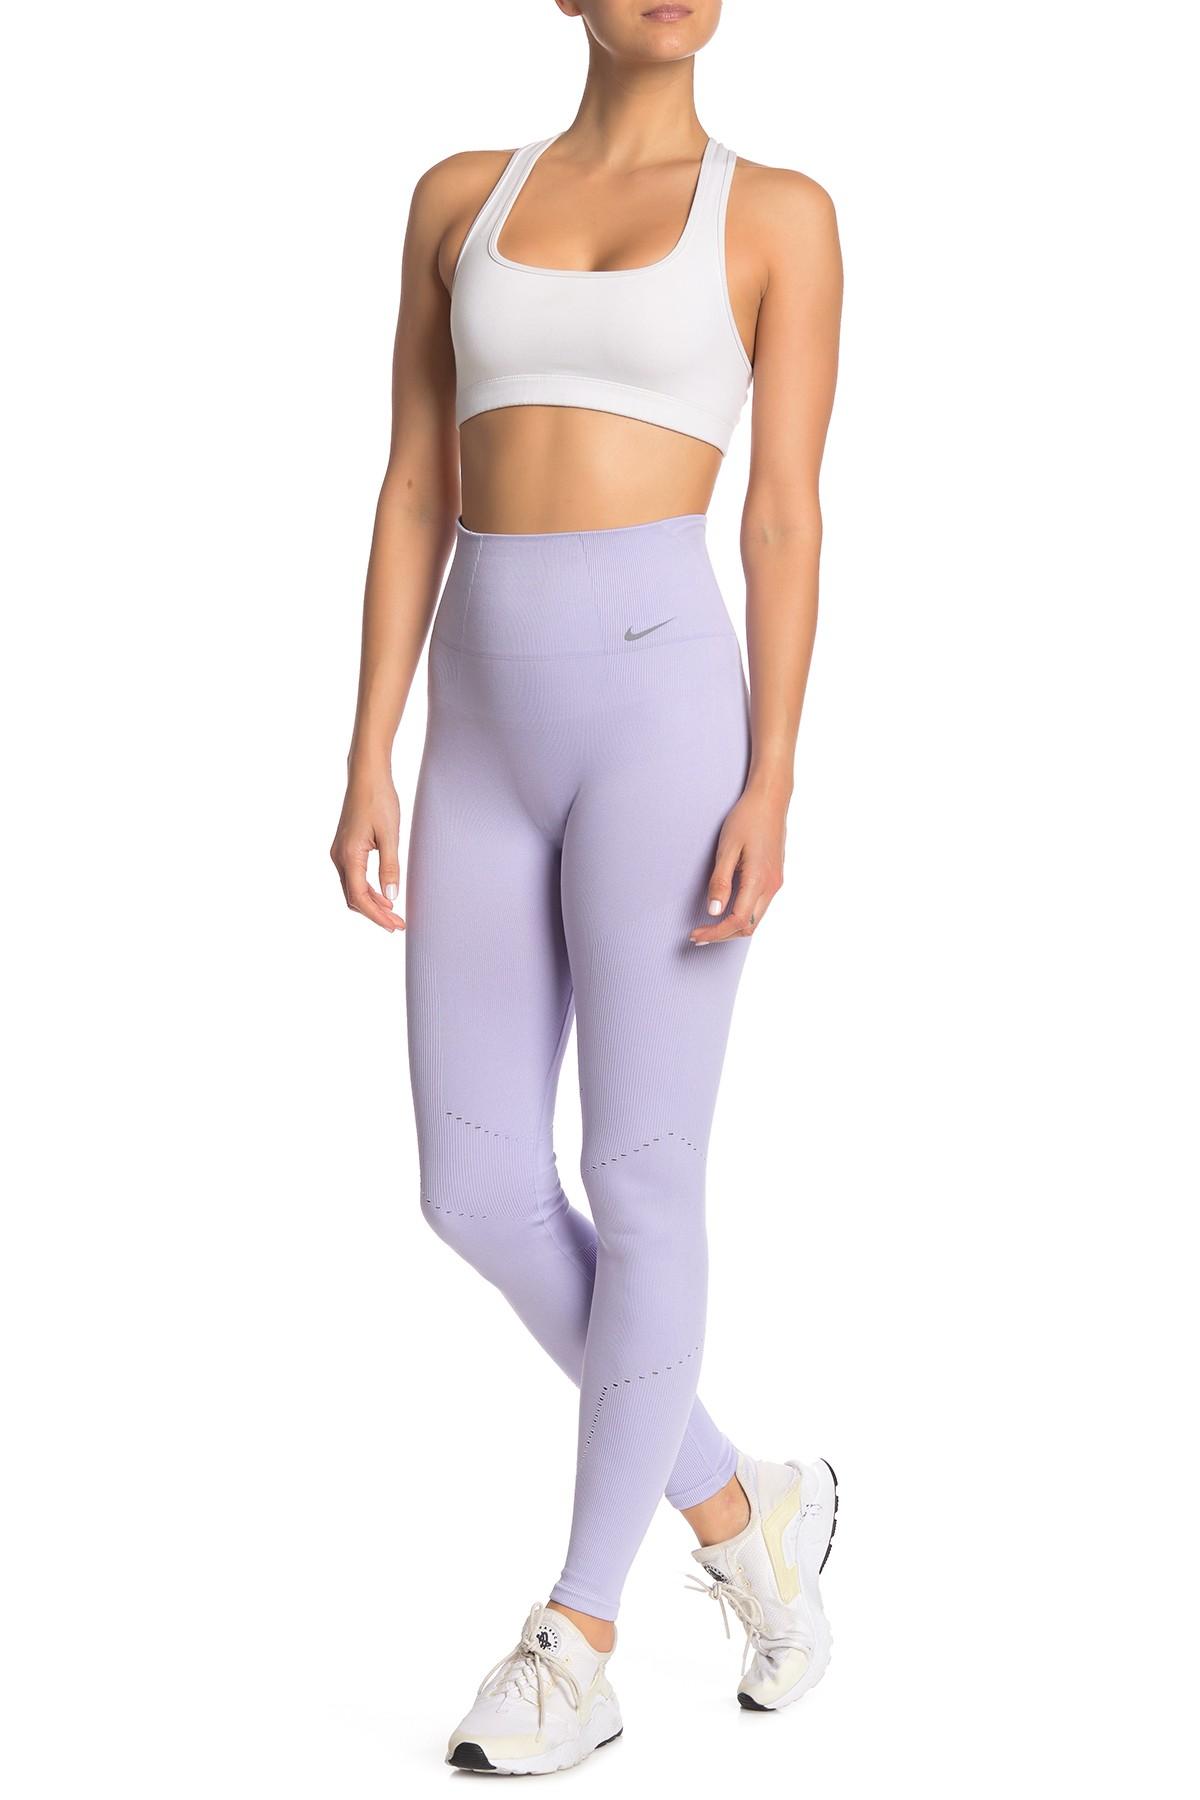 Nike Nike Yoga Dri-fit Power Seamless leggings With Small Logo in Purple